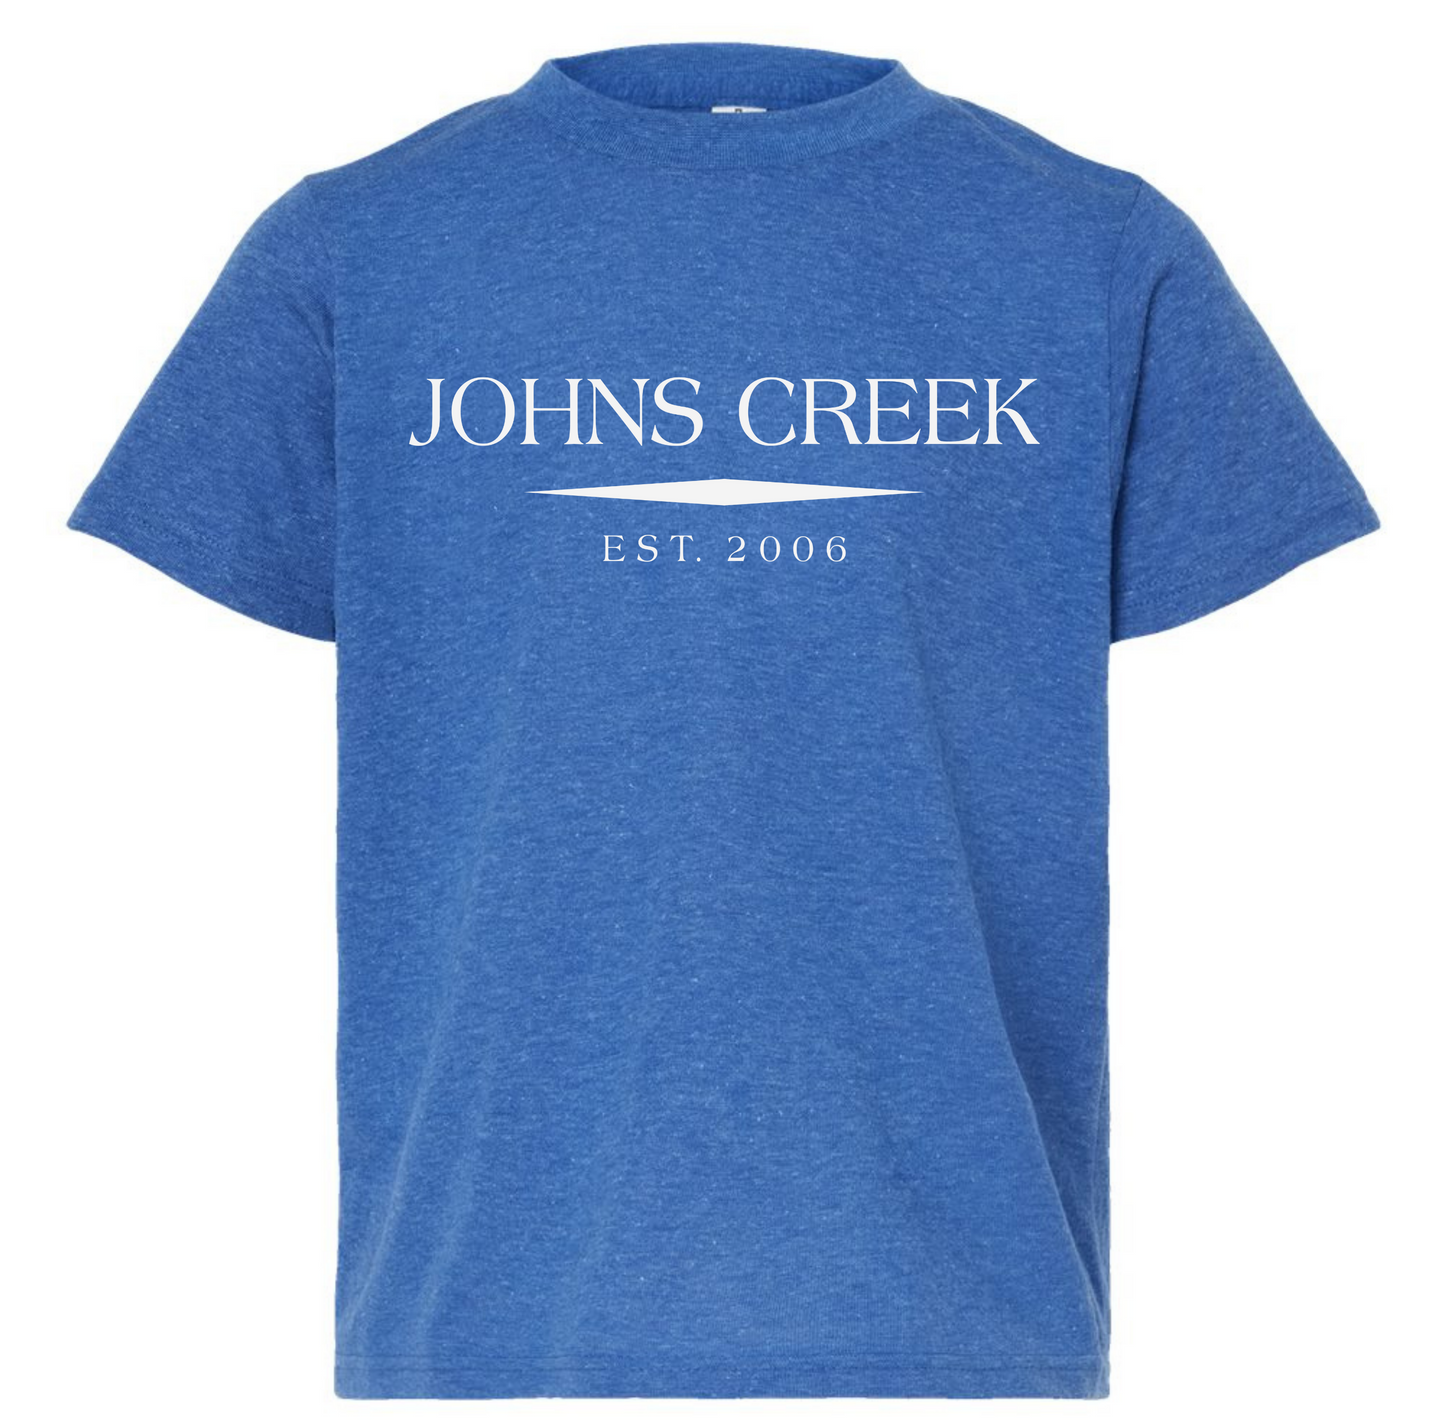 Johns Creek T-Shirt